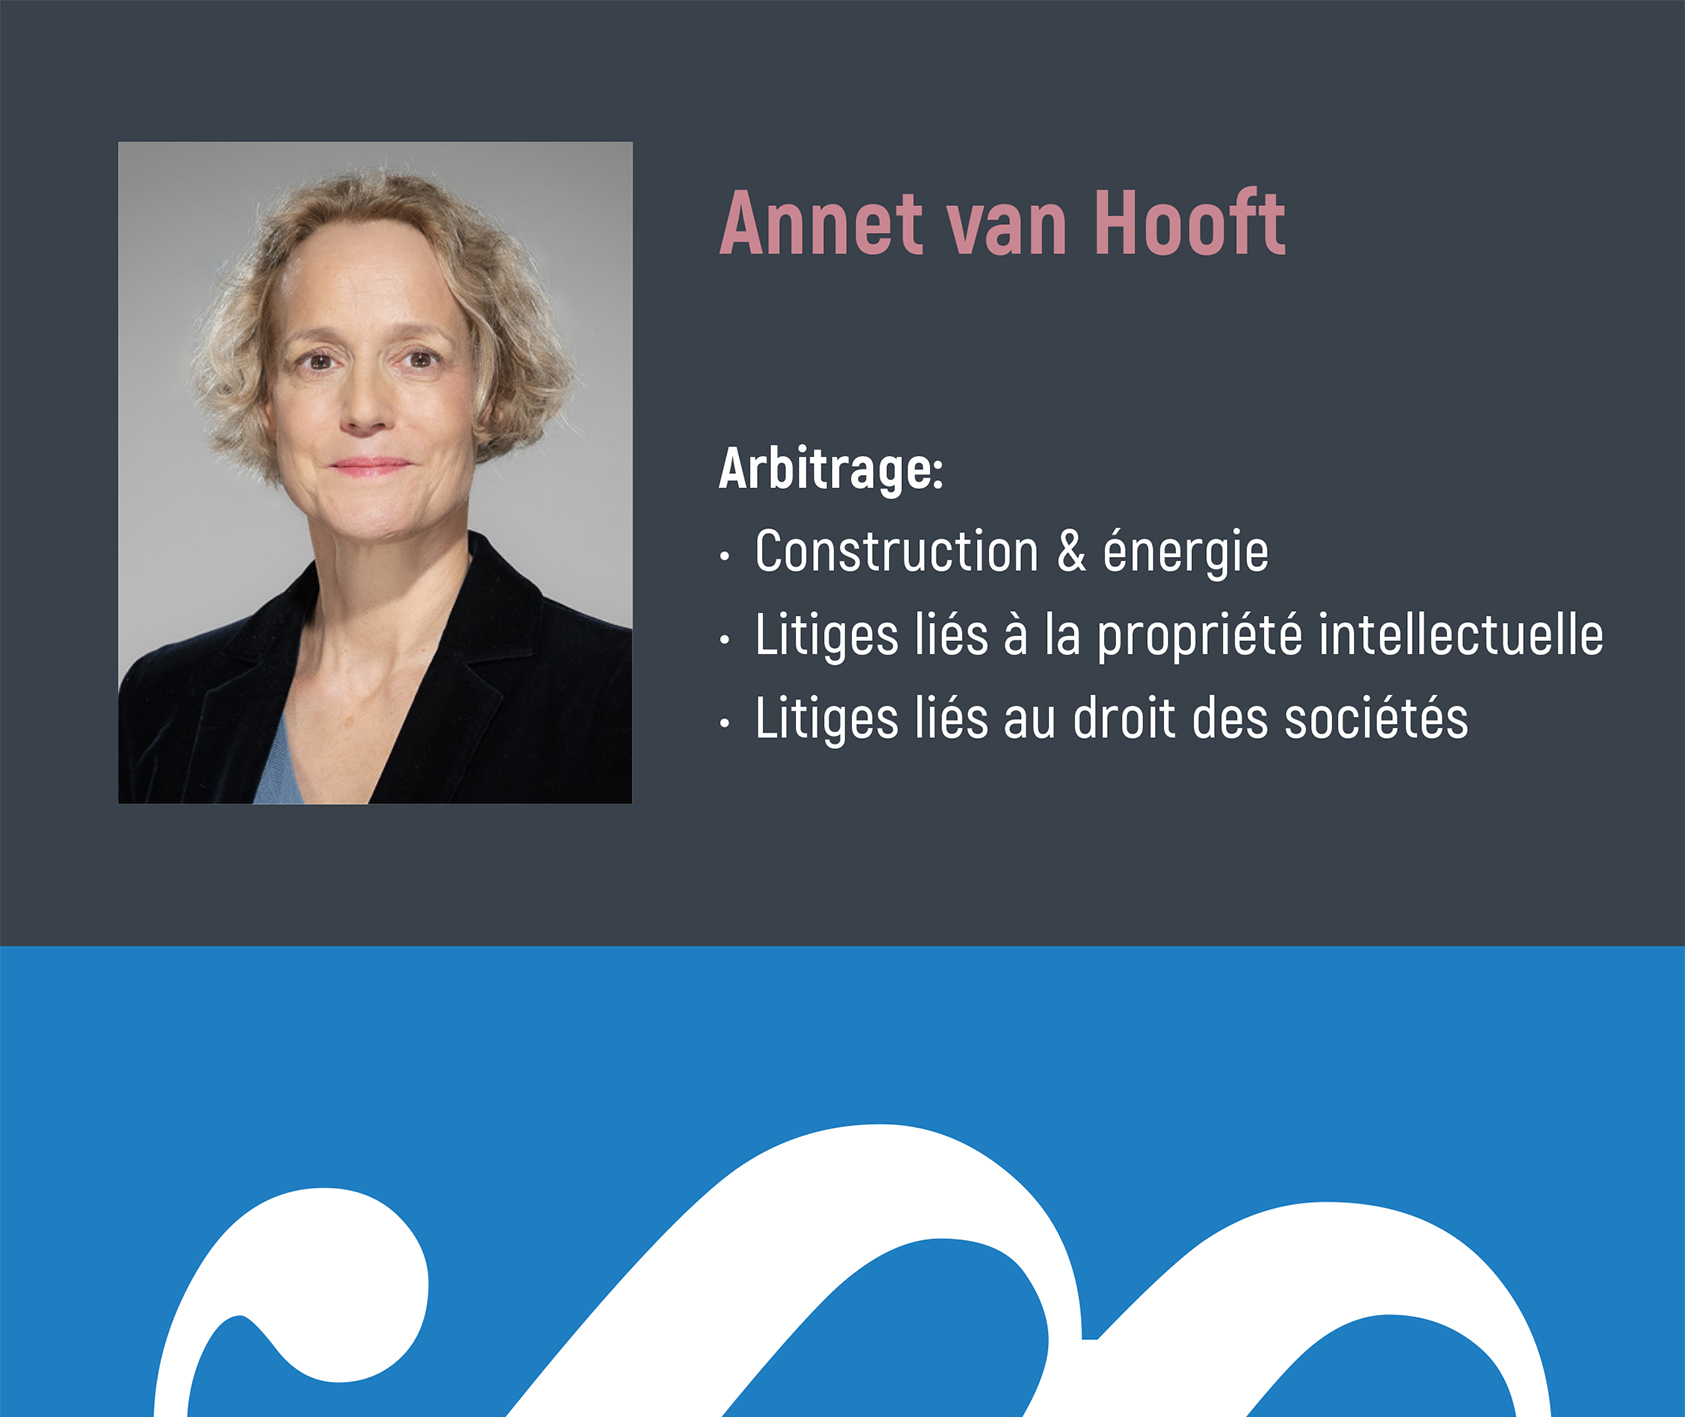 Annet van Hooft